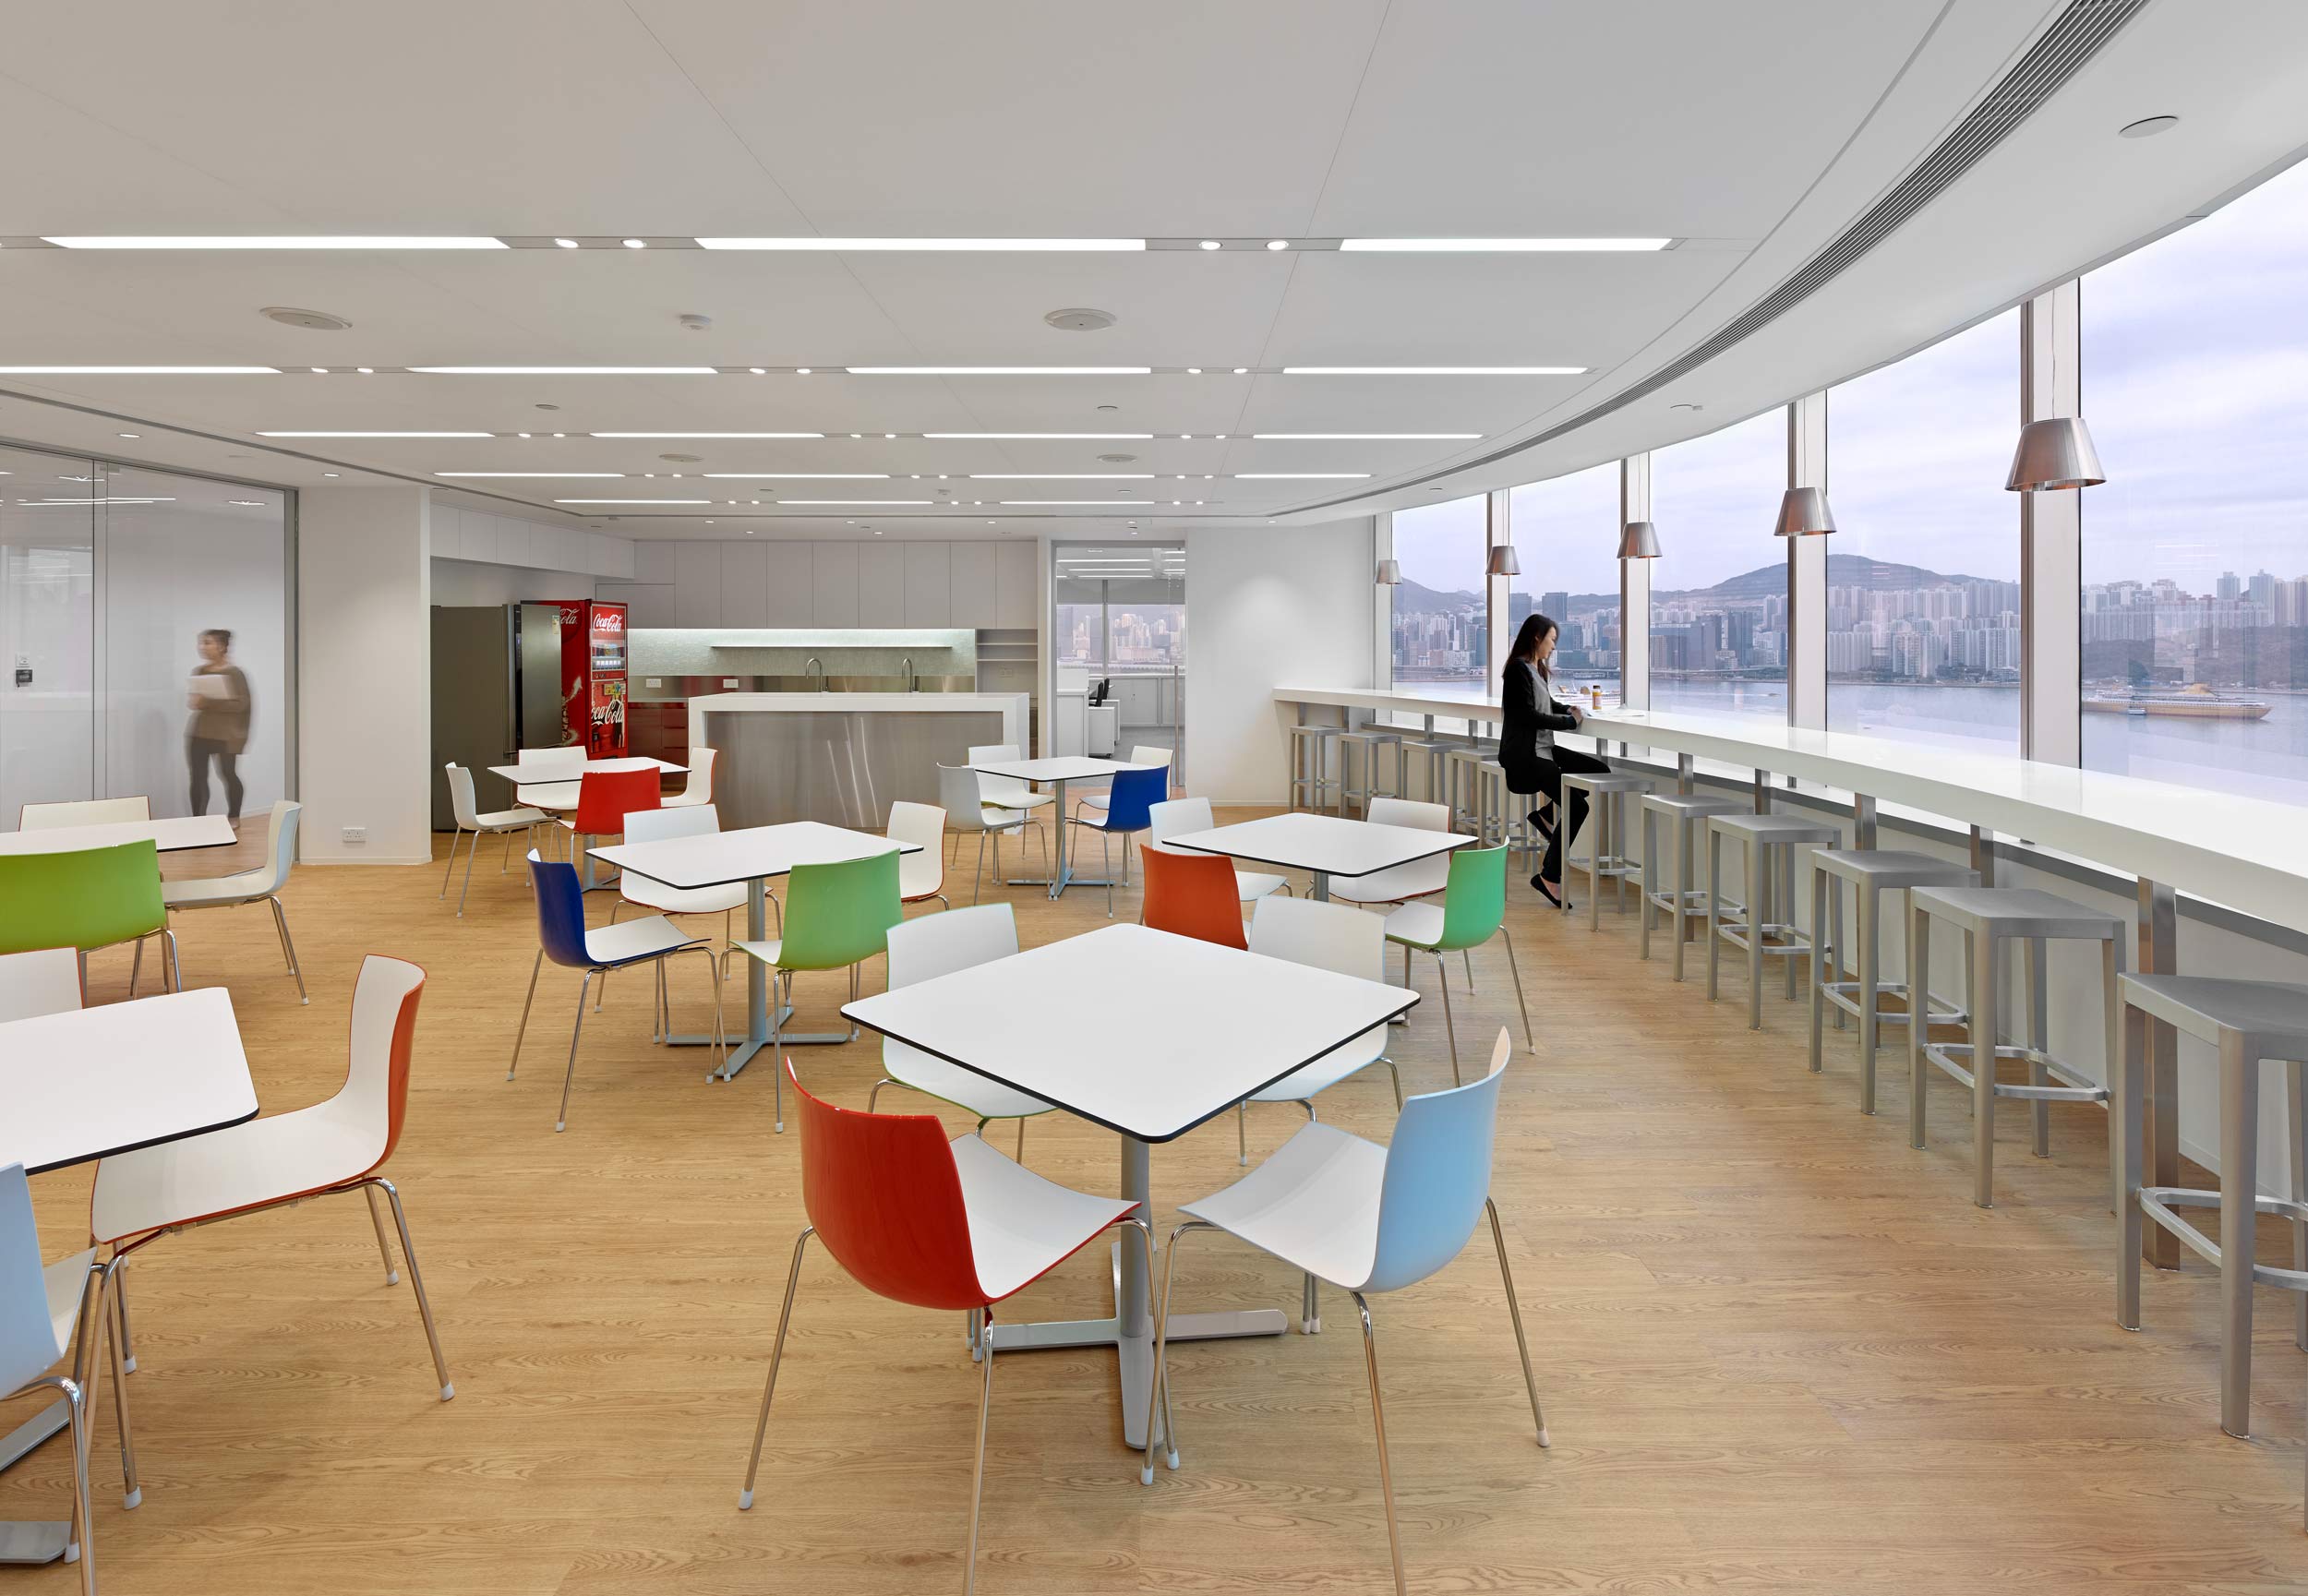 Bupa-office-canteen-interior-Gensler